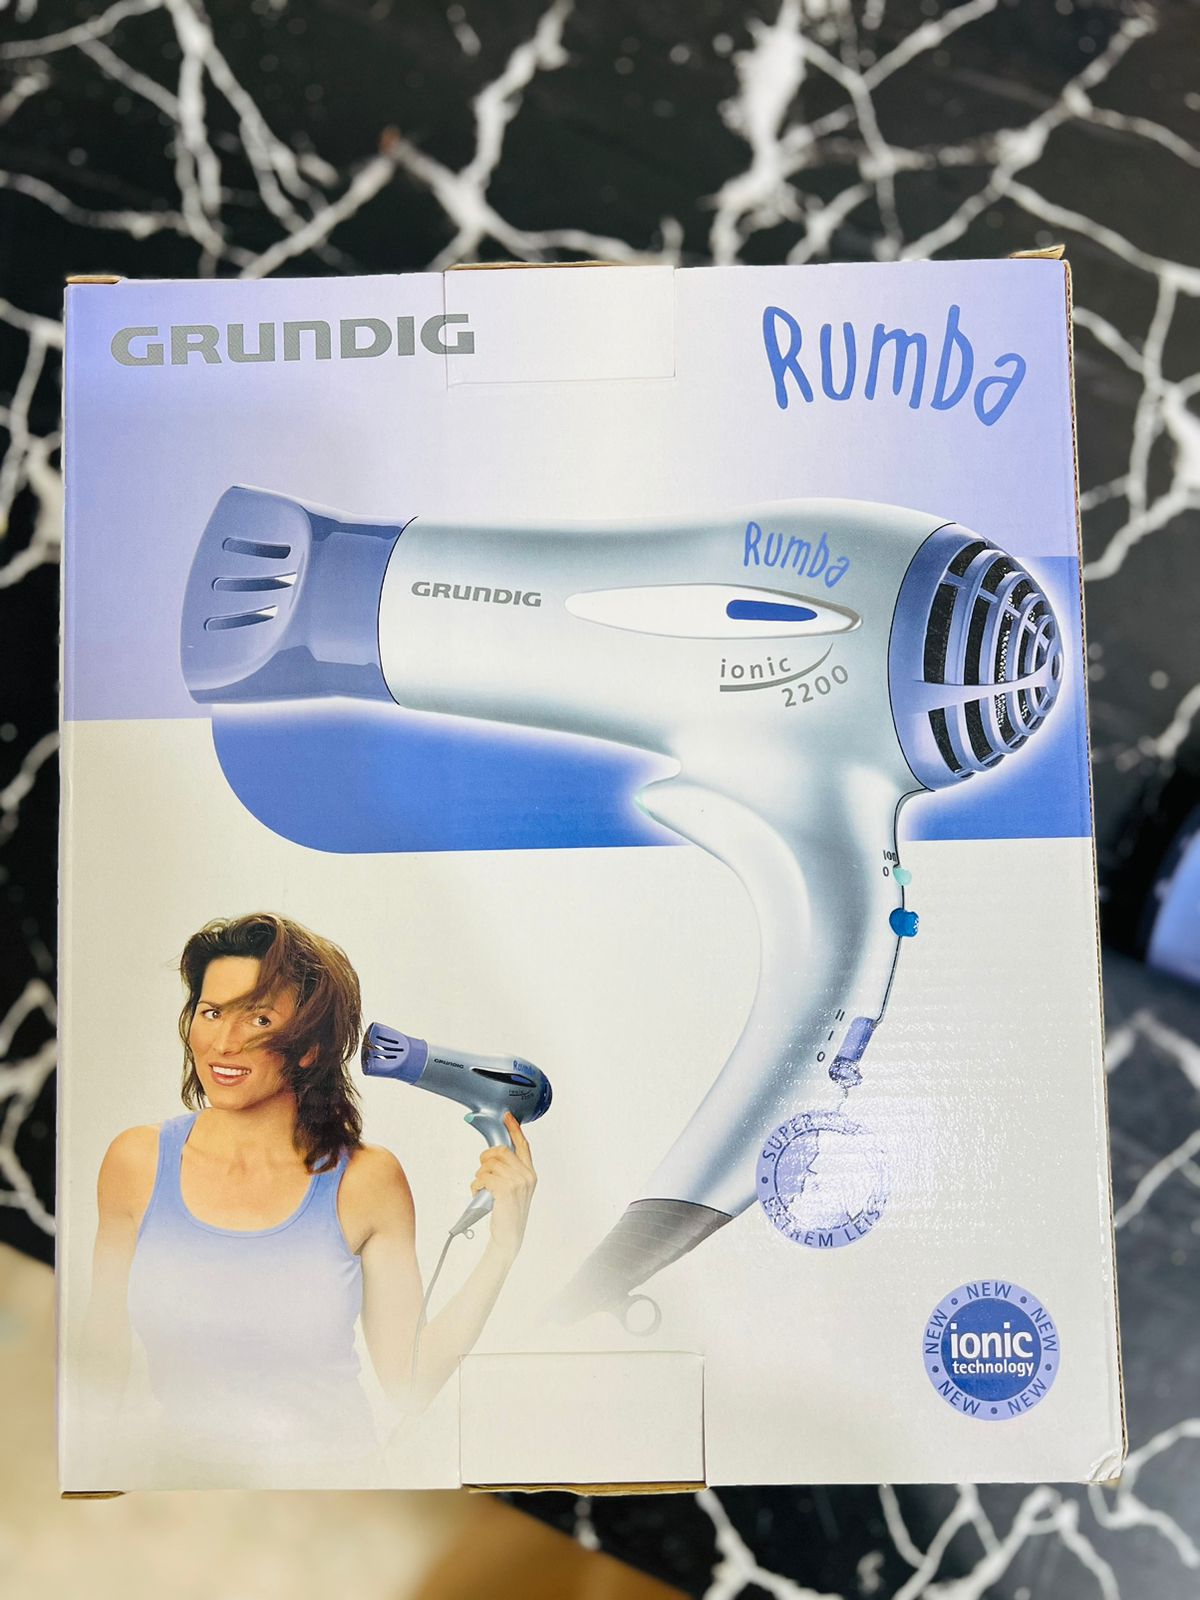 Grundig Germany Professional hair dryer RUMBA IONIC